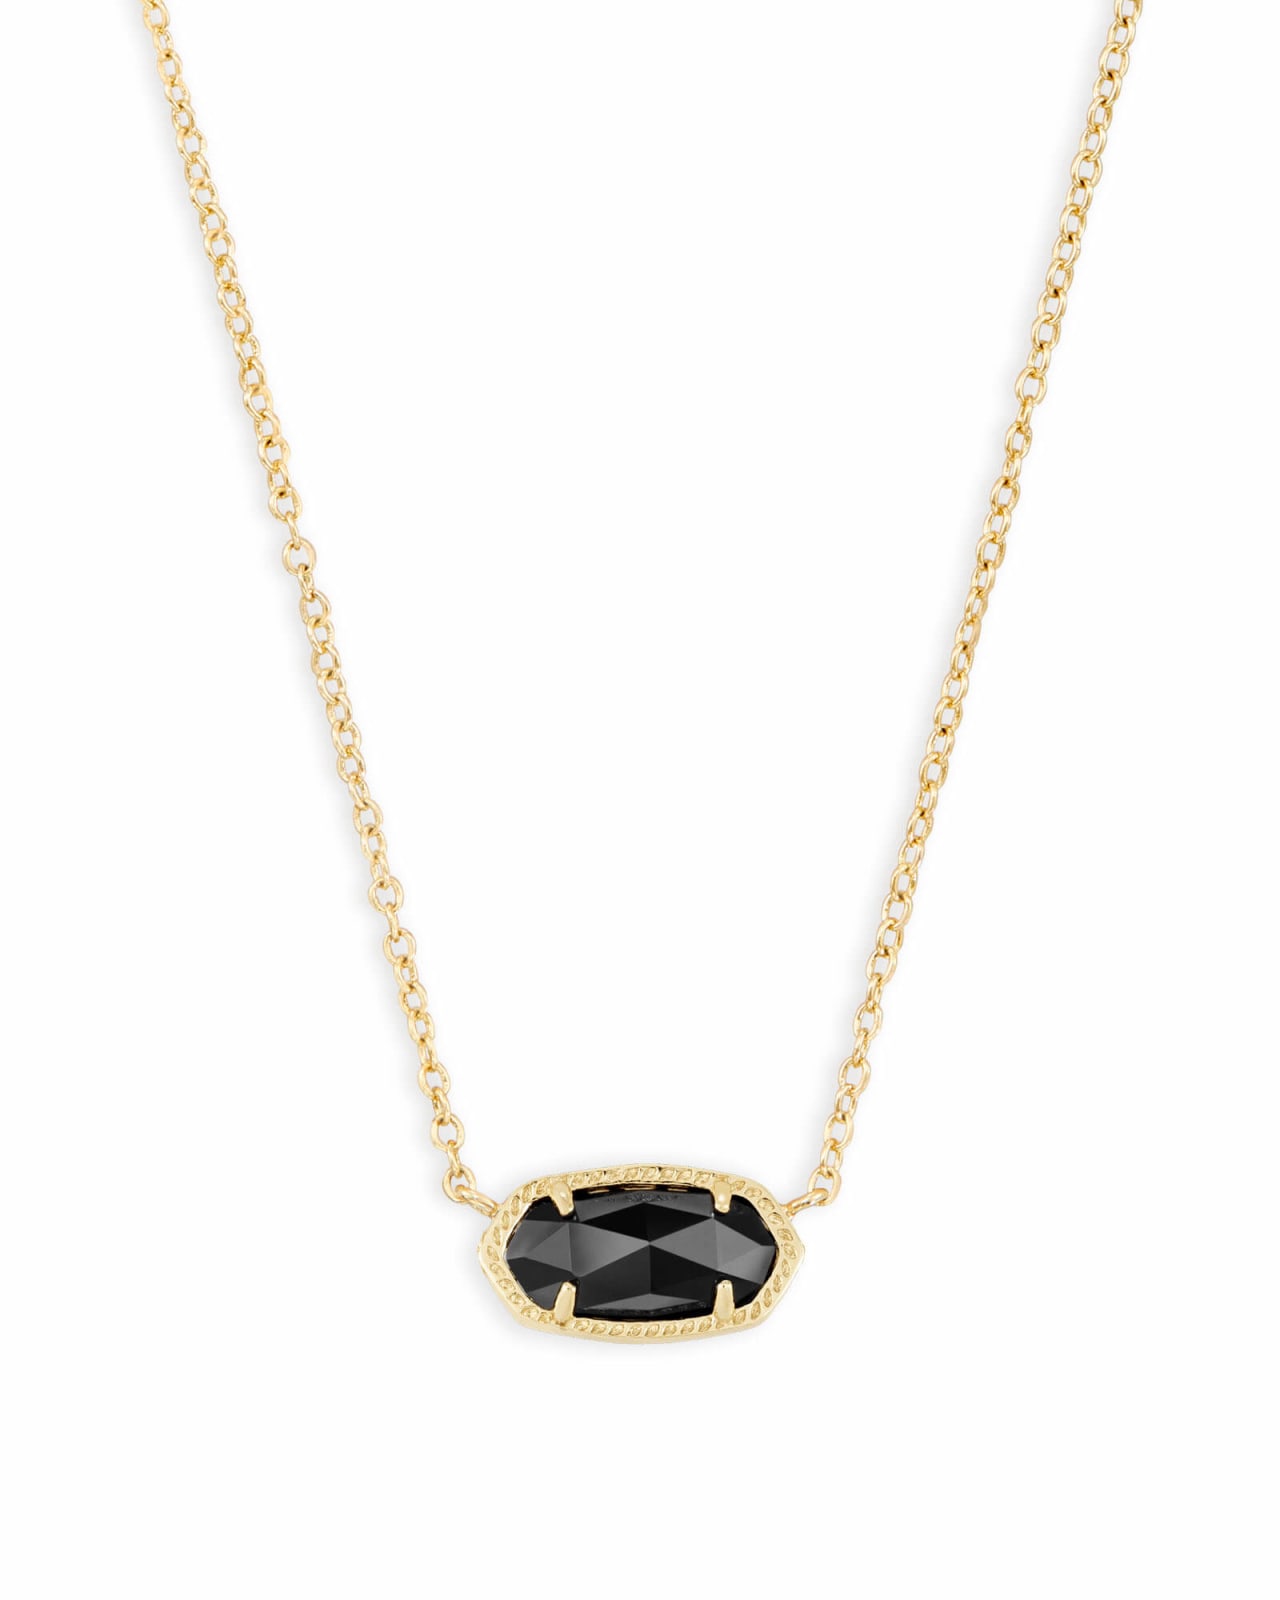 Elisa Gold Pendant Necklace in Black Opaque Glass | Kendra Scott